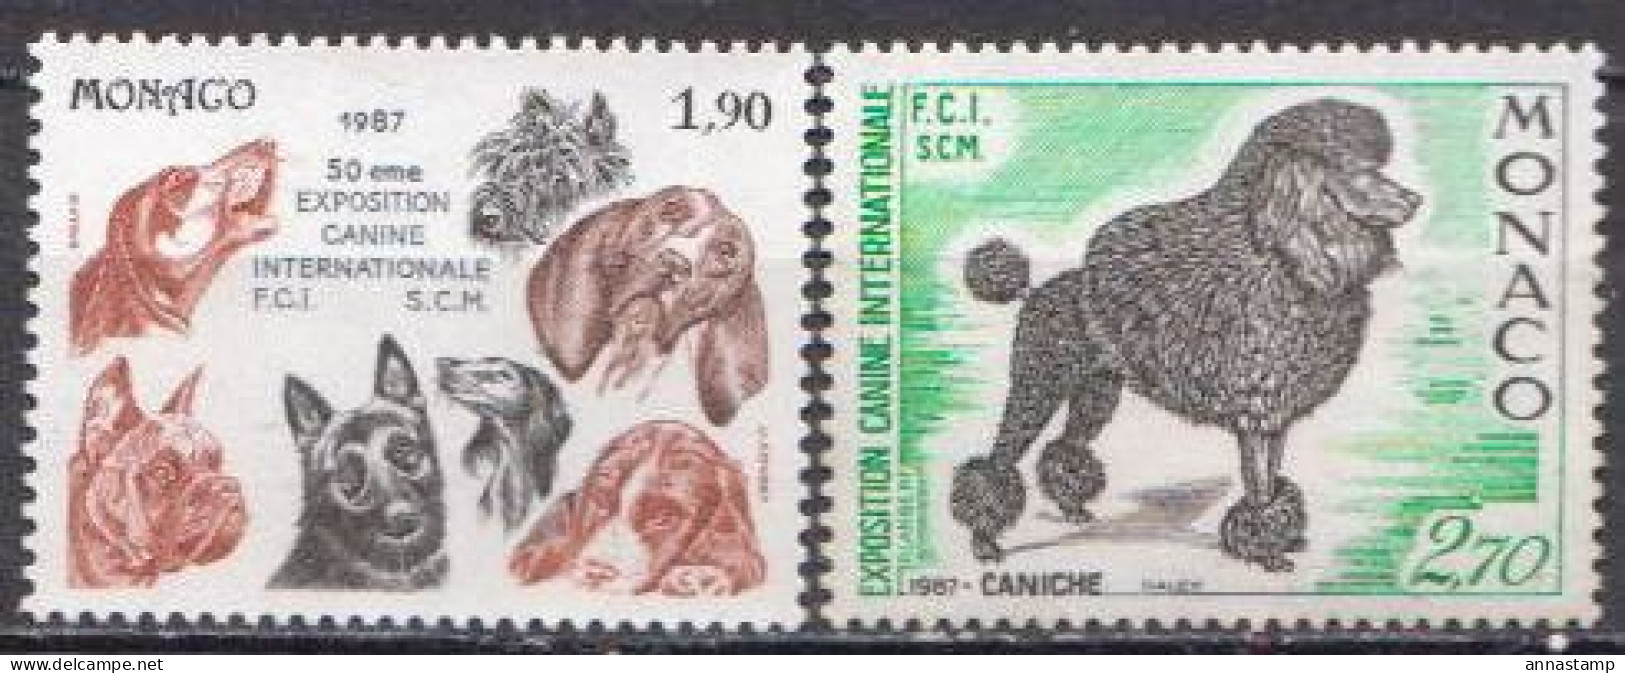 Monaco MNH Stamps - Perros